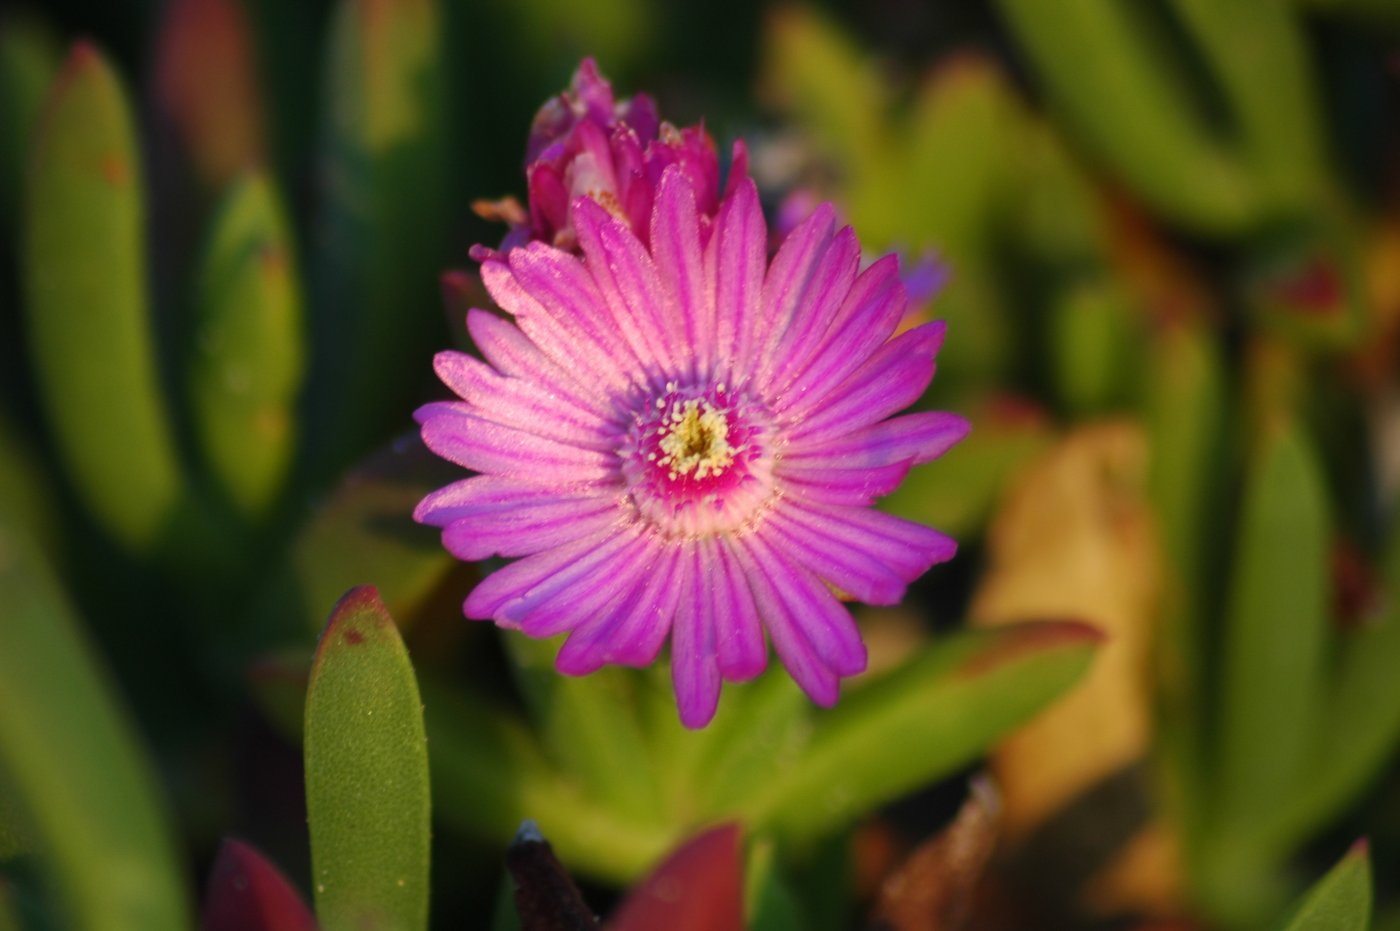 A Ruschia flower